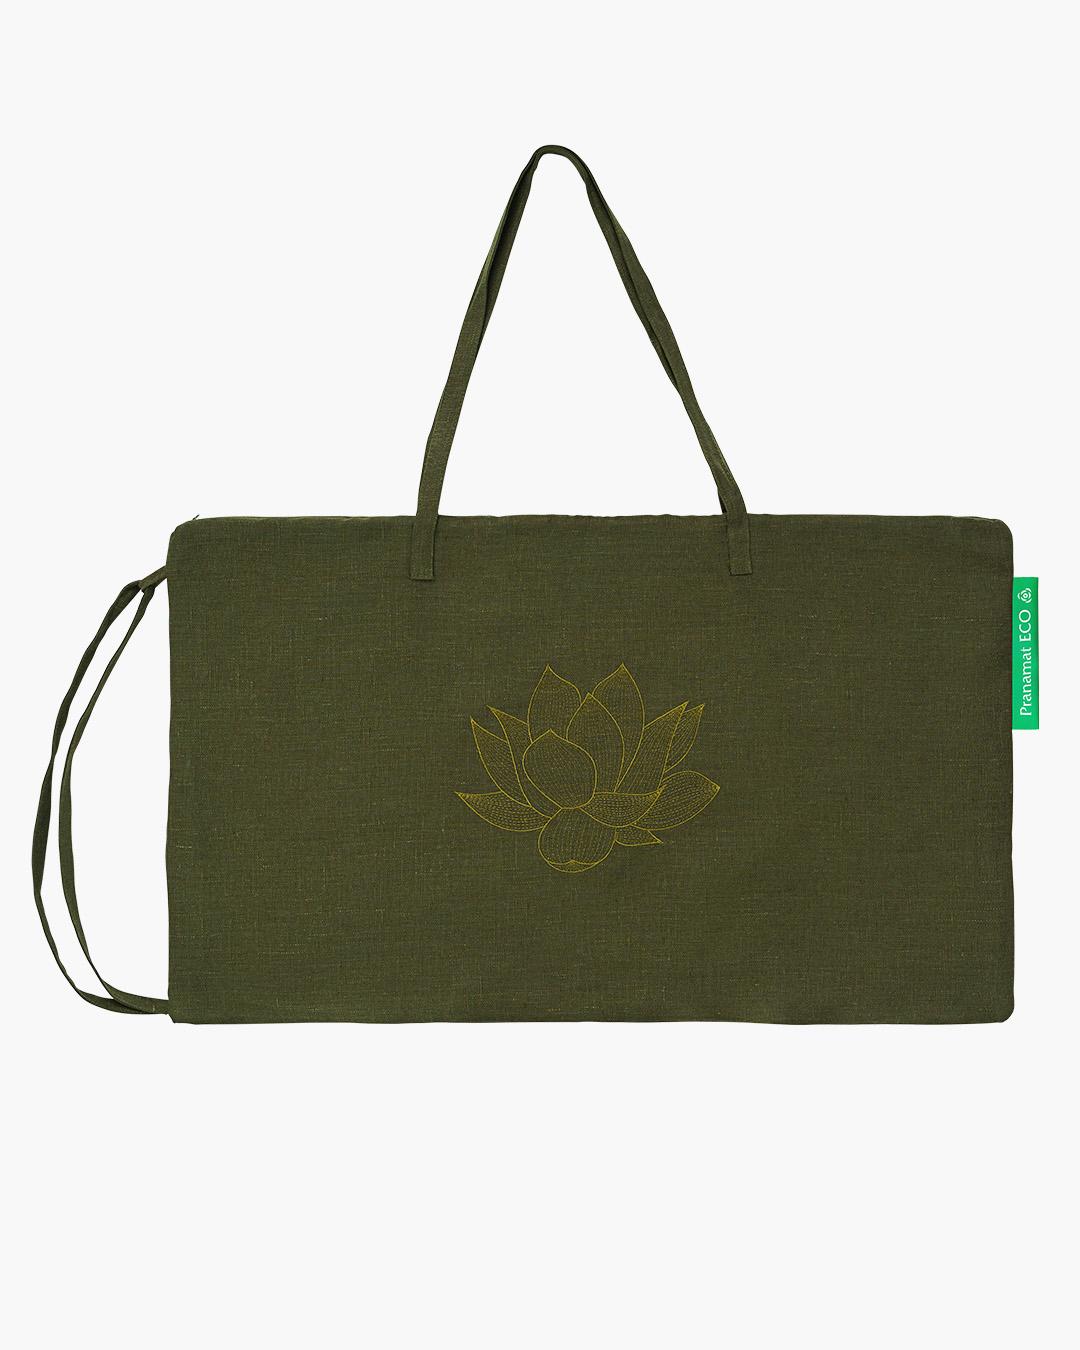 Komplet za masažu: prostirka + jastuk + mini + vreća (Zelena)